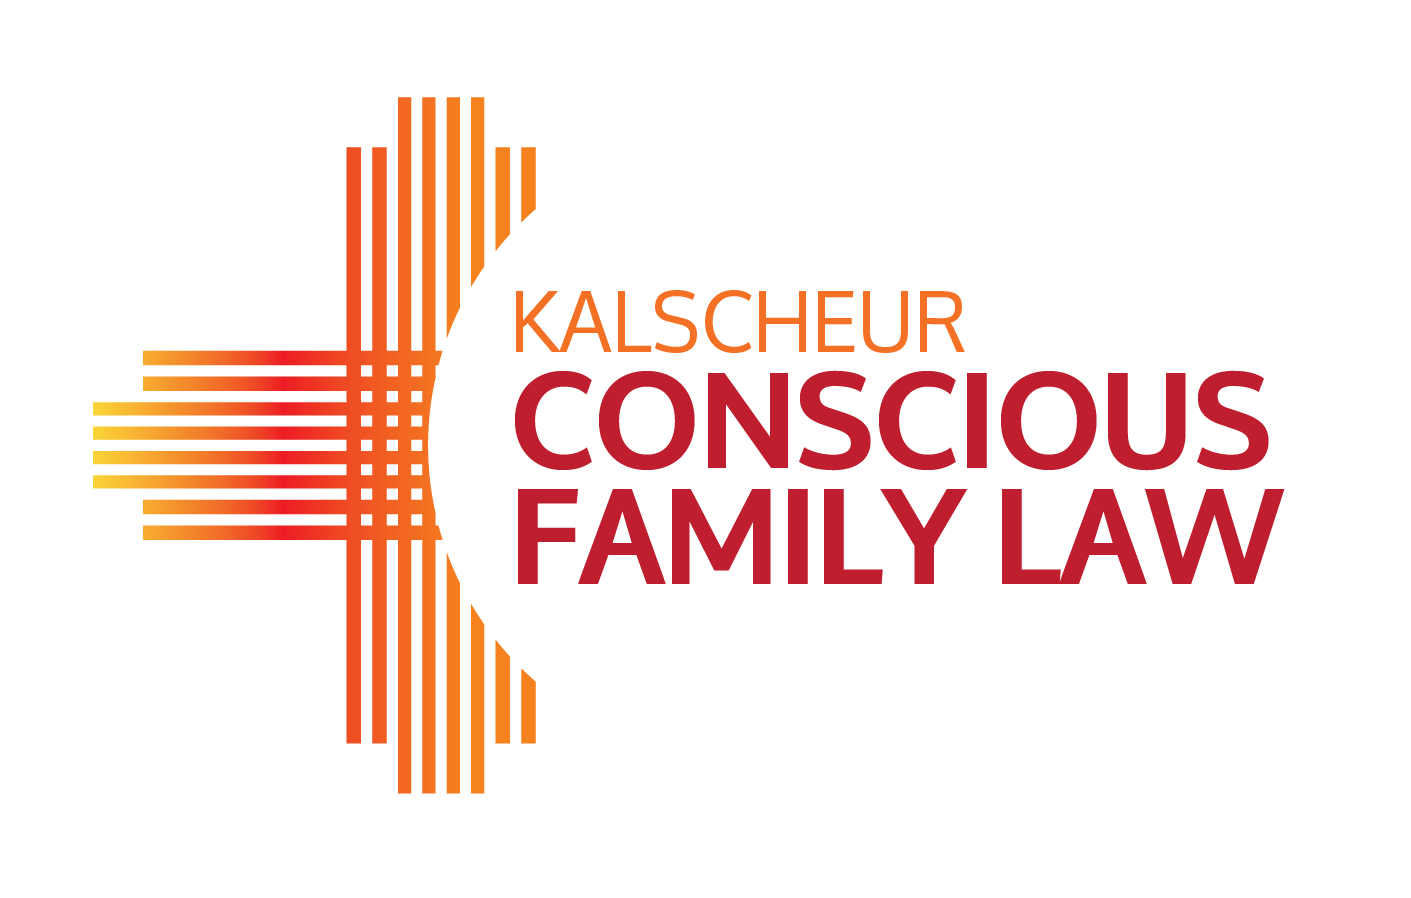 Kalscheur Conscious Family Law